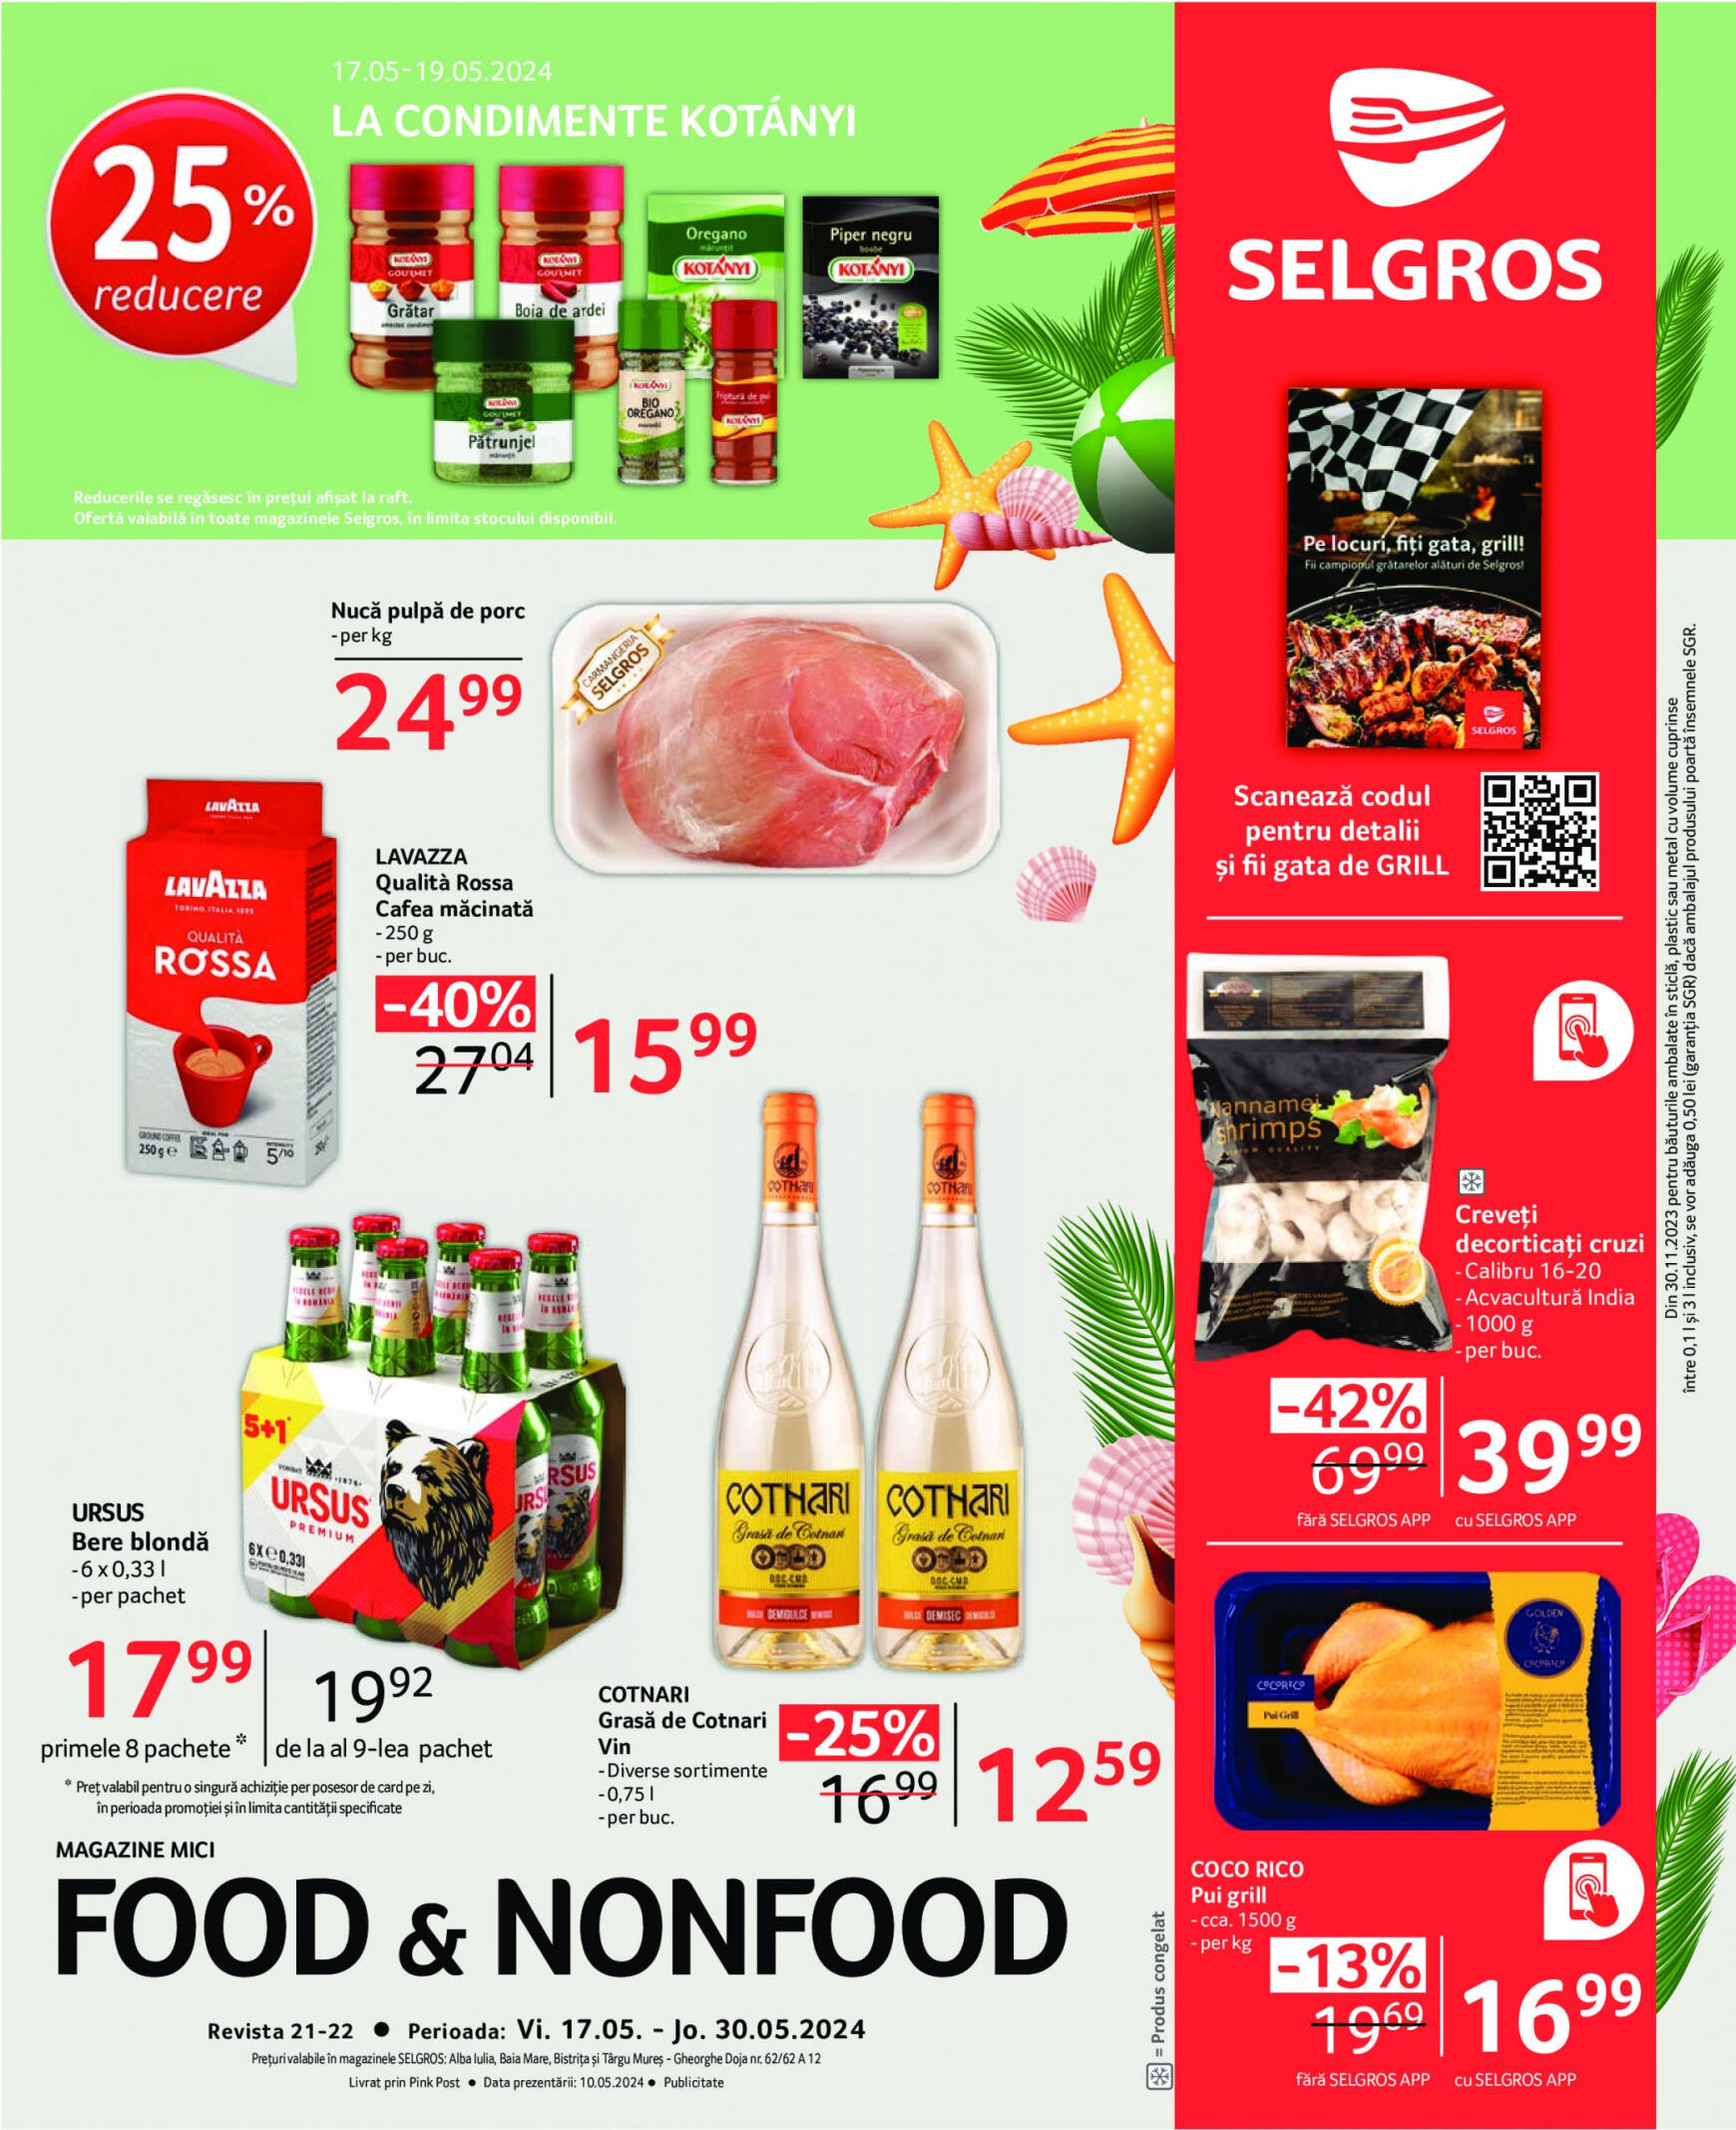 selgros - Catalog nou Selgros - Food & Nonfood 17.05. - 30.05. - page: 1